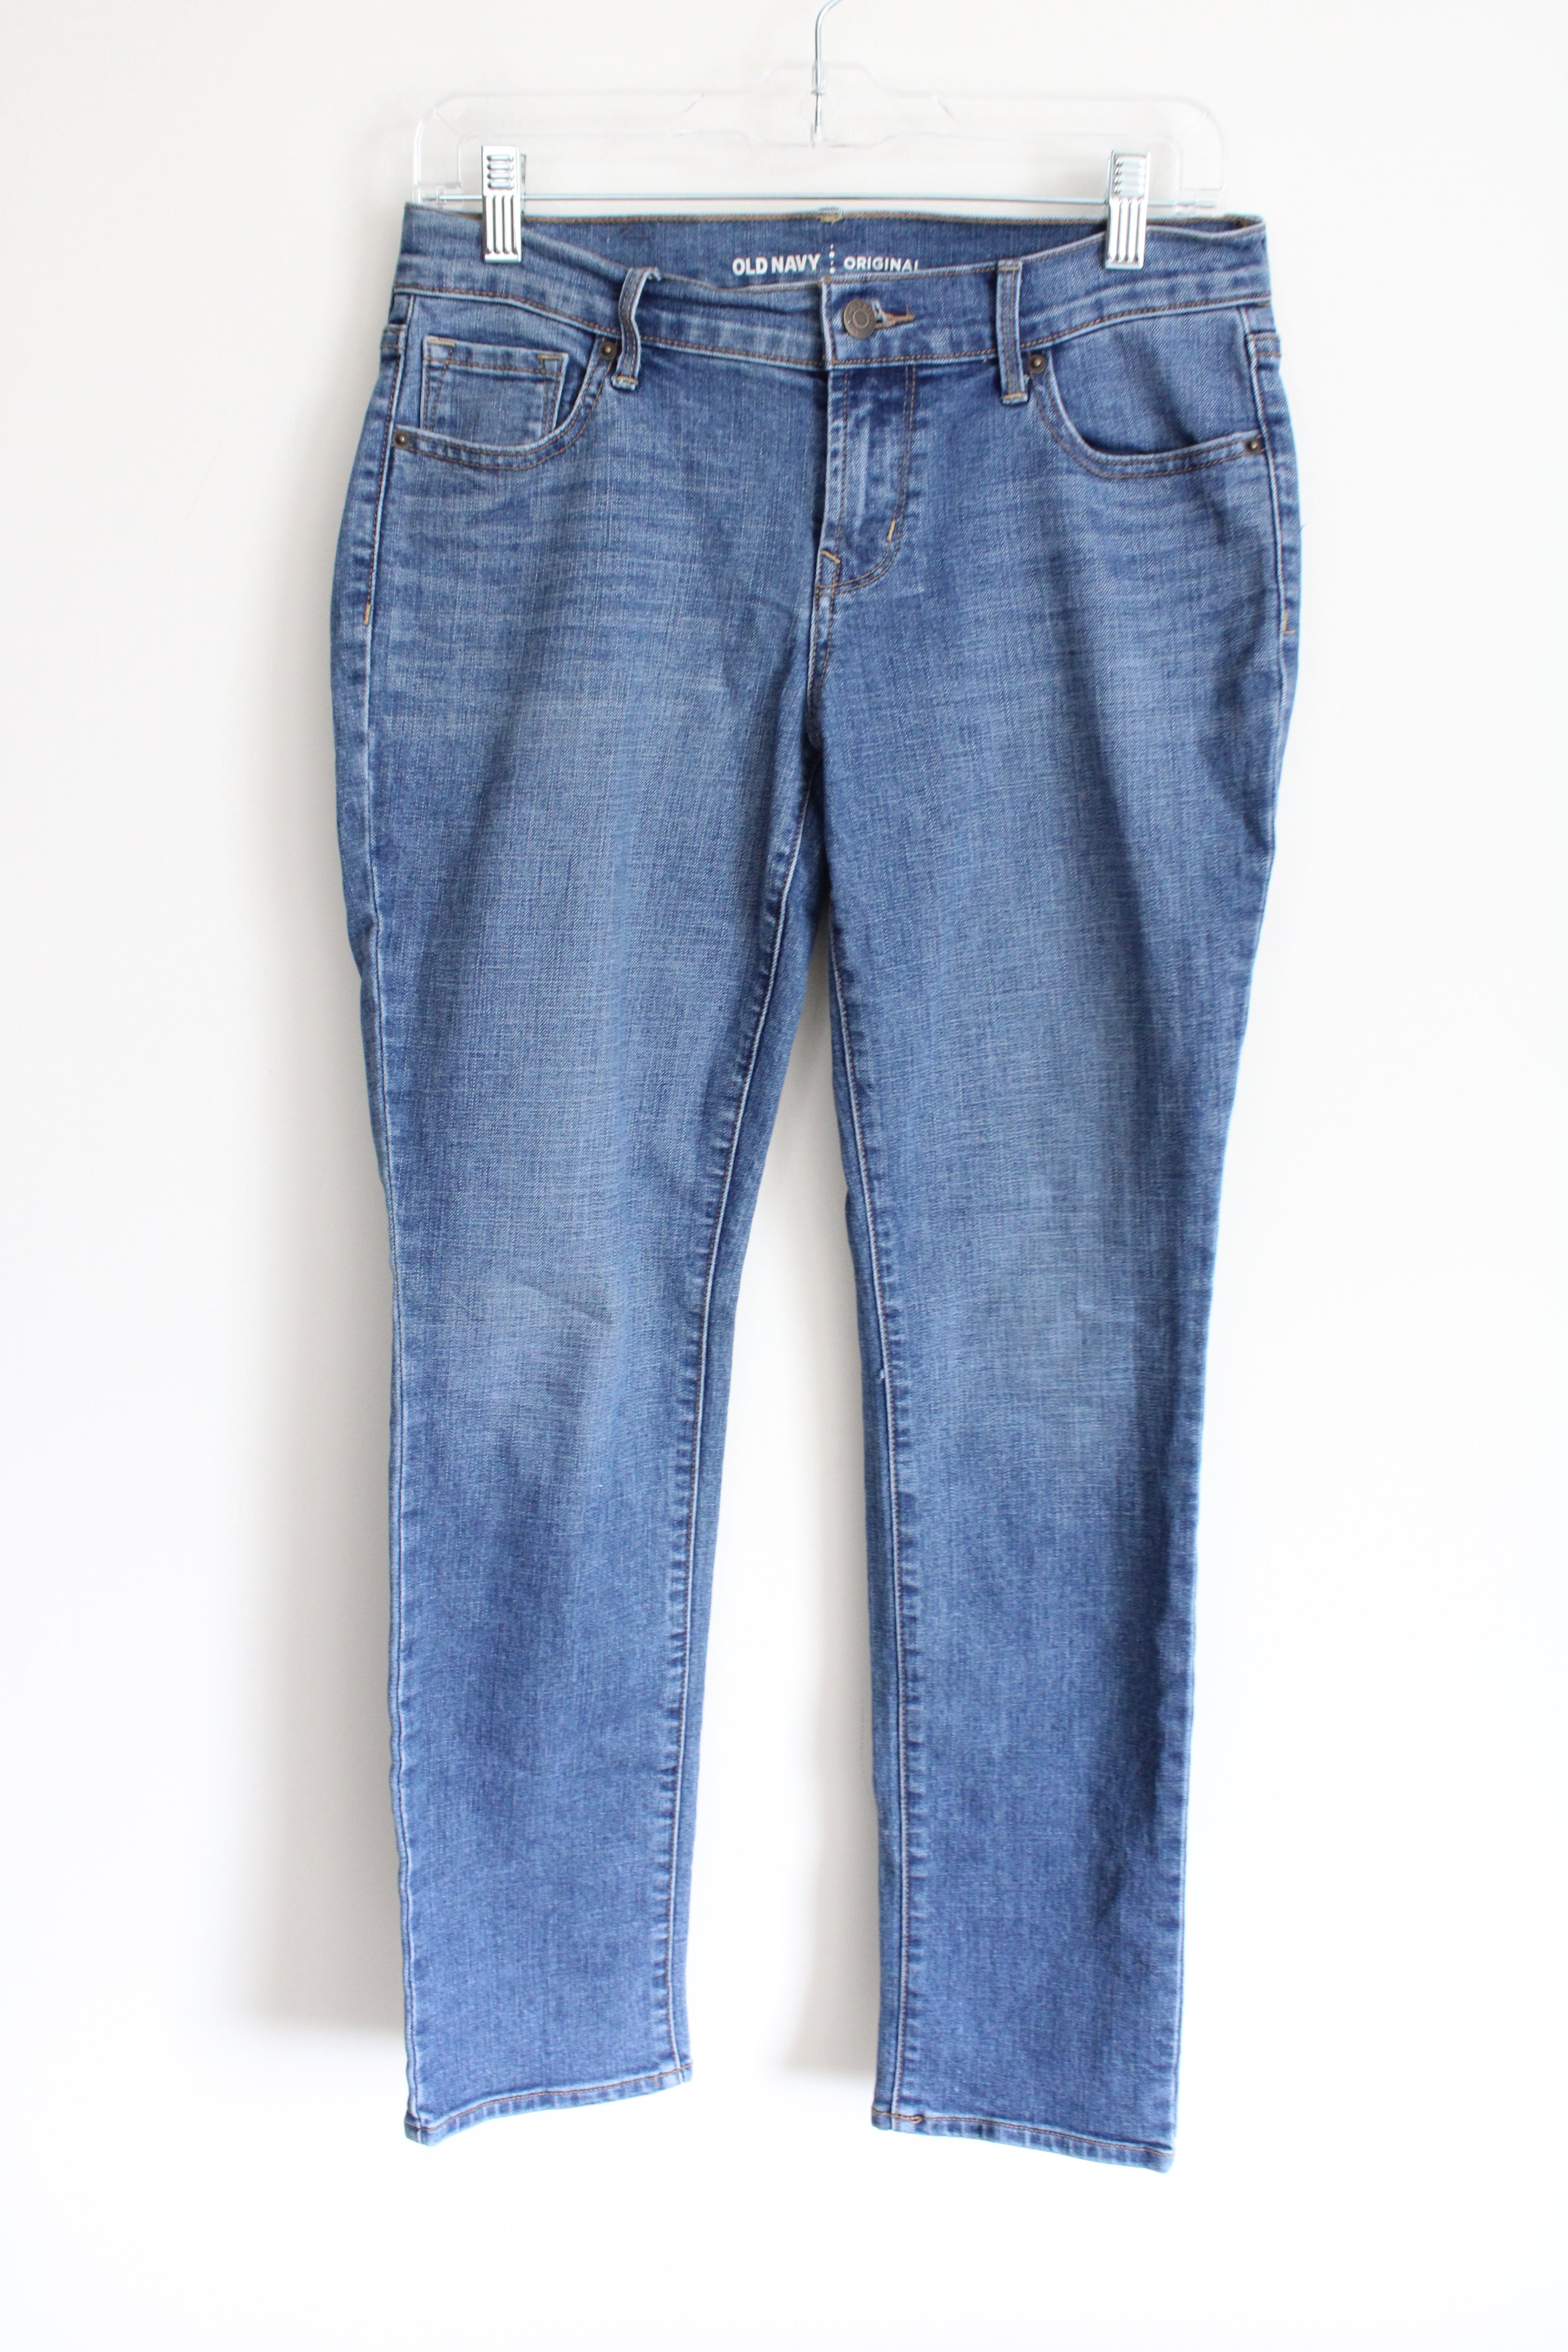 Old Navy Mid Rise Original Jeans | 12 Short